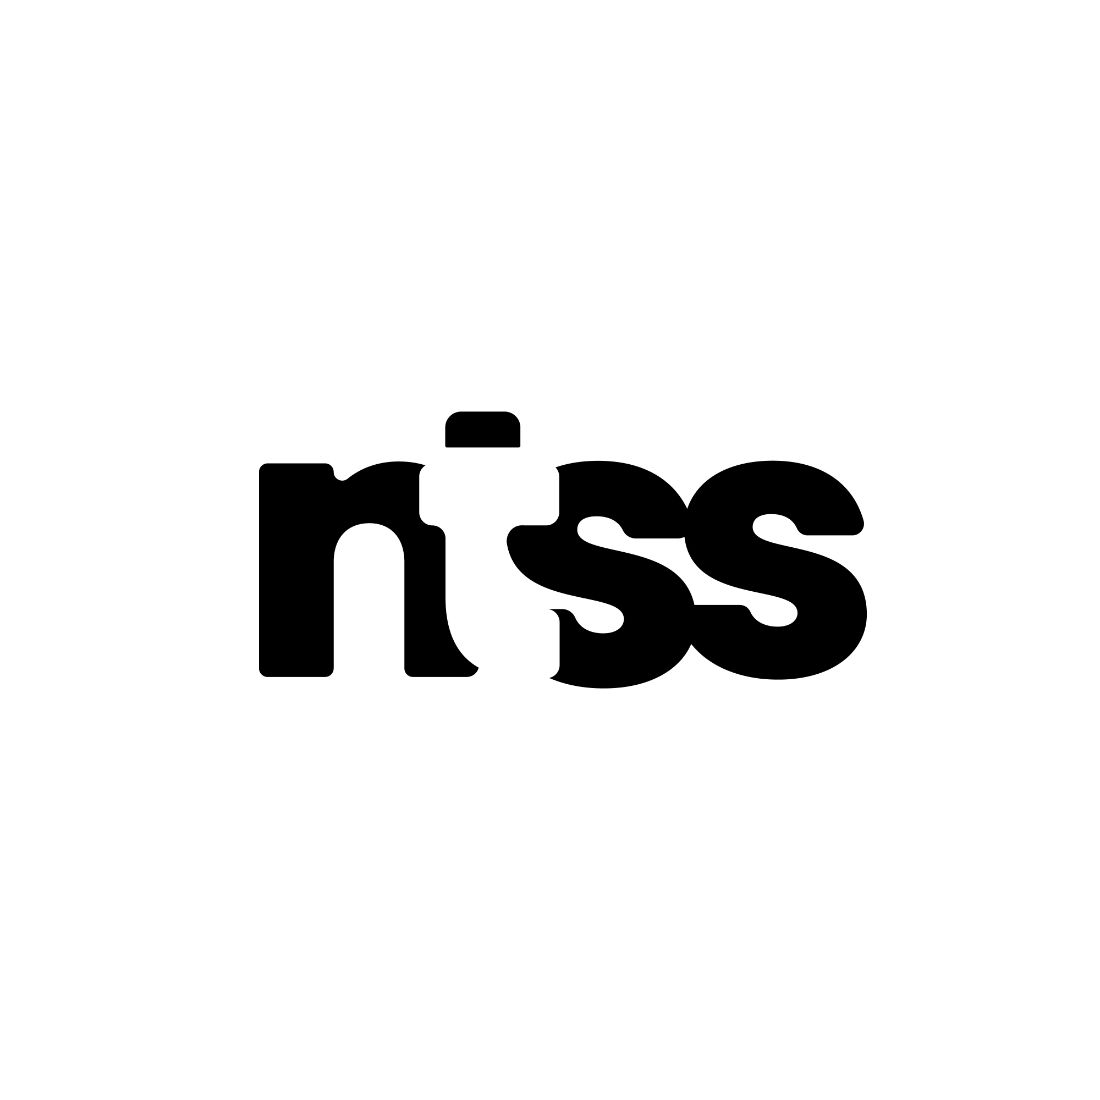 Lettering Ntss Logo Black Design preview image.